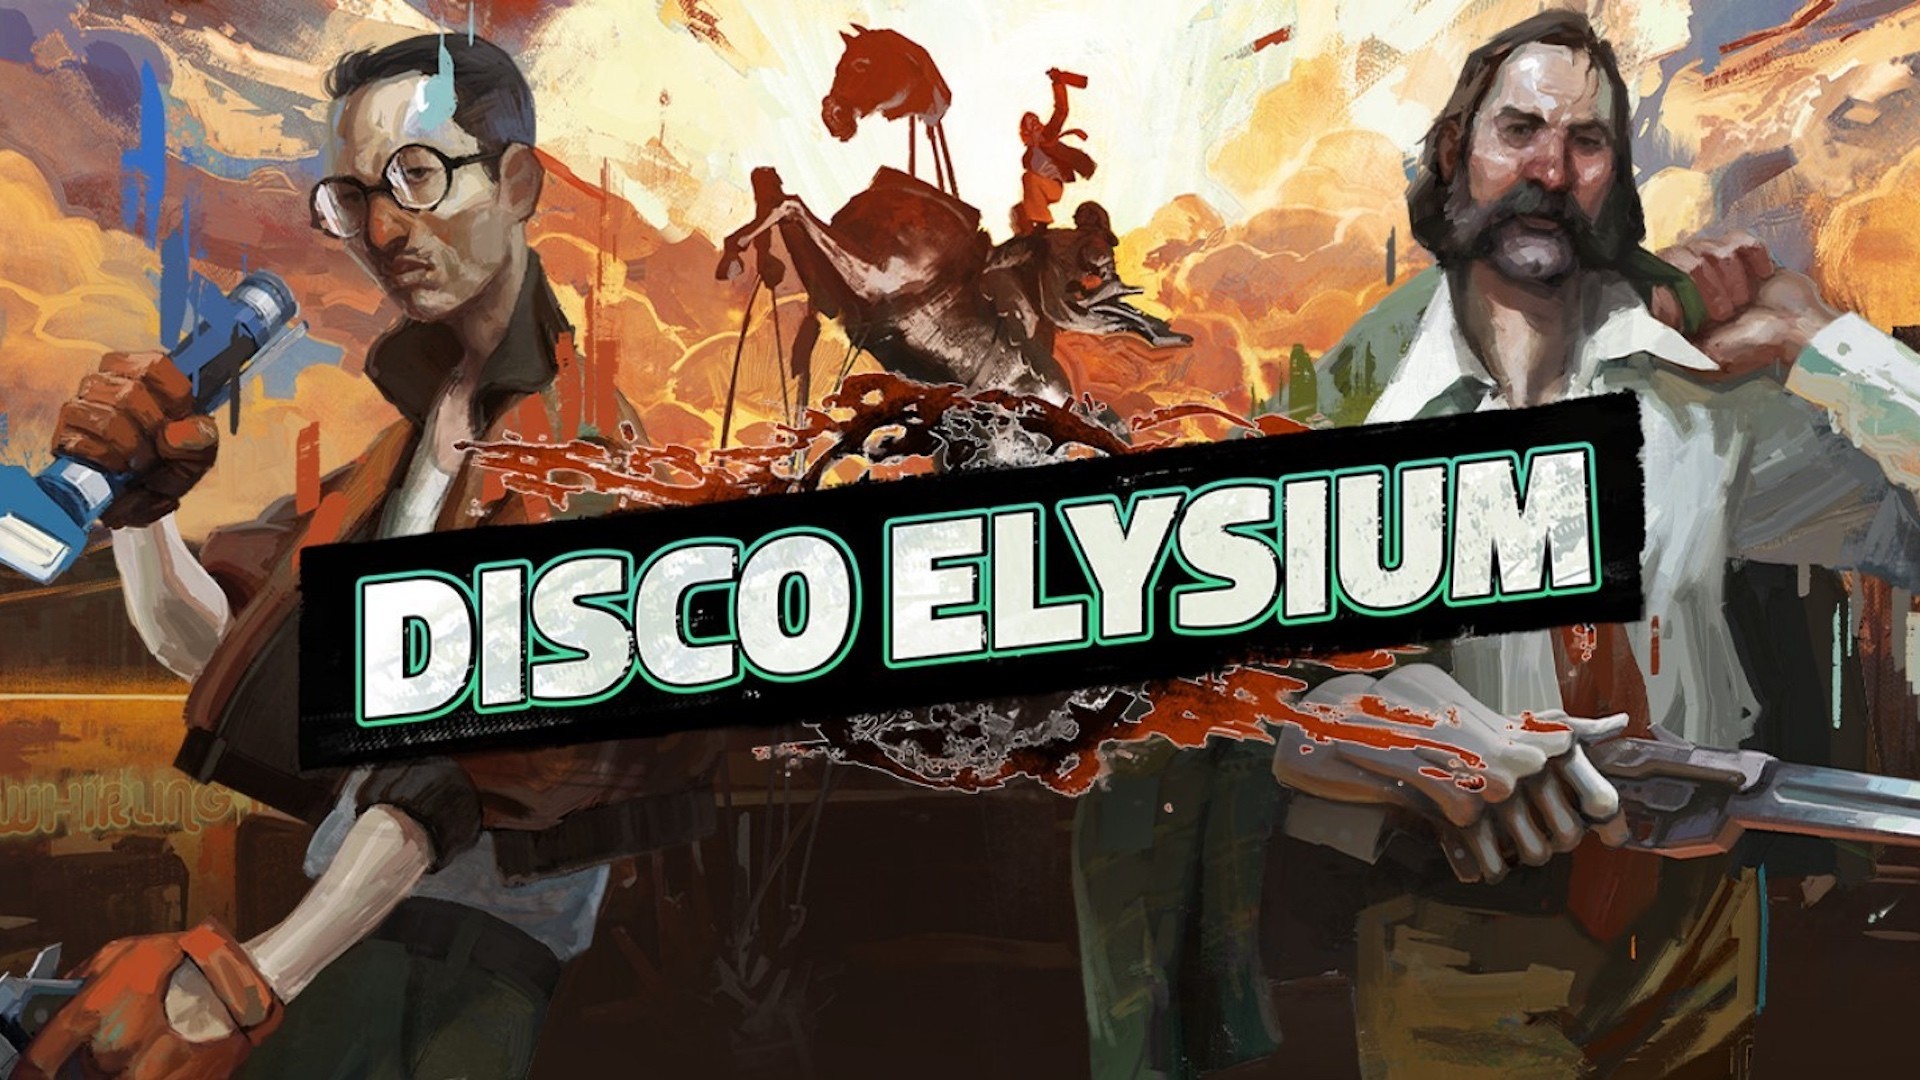 Disco Elysium: The Final Cut Review (PS5)